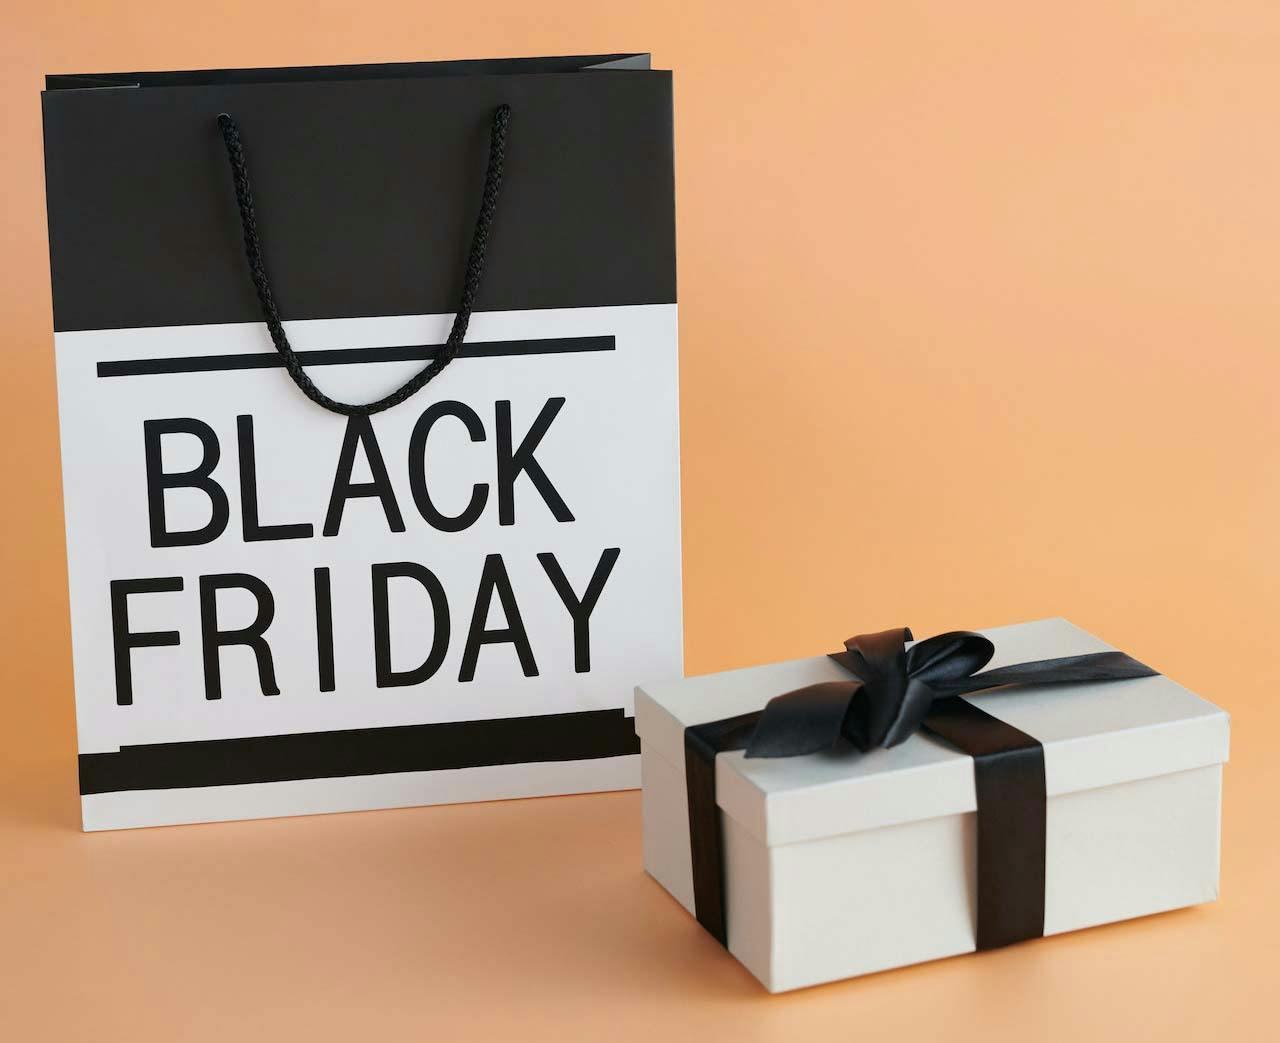 Black Friday Shopping Bag and Gift Box 2022 Deals.jpg